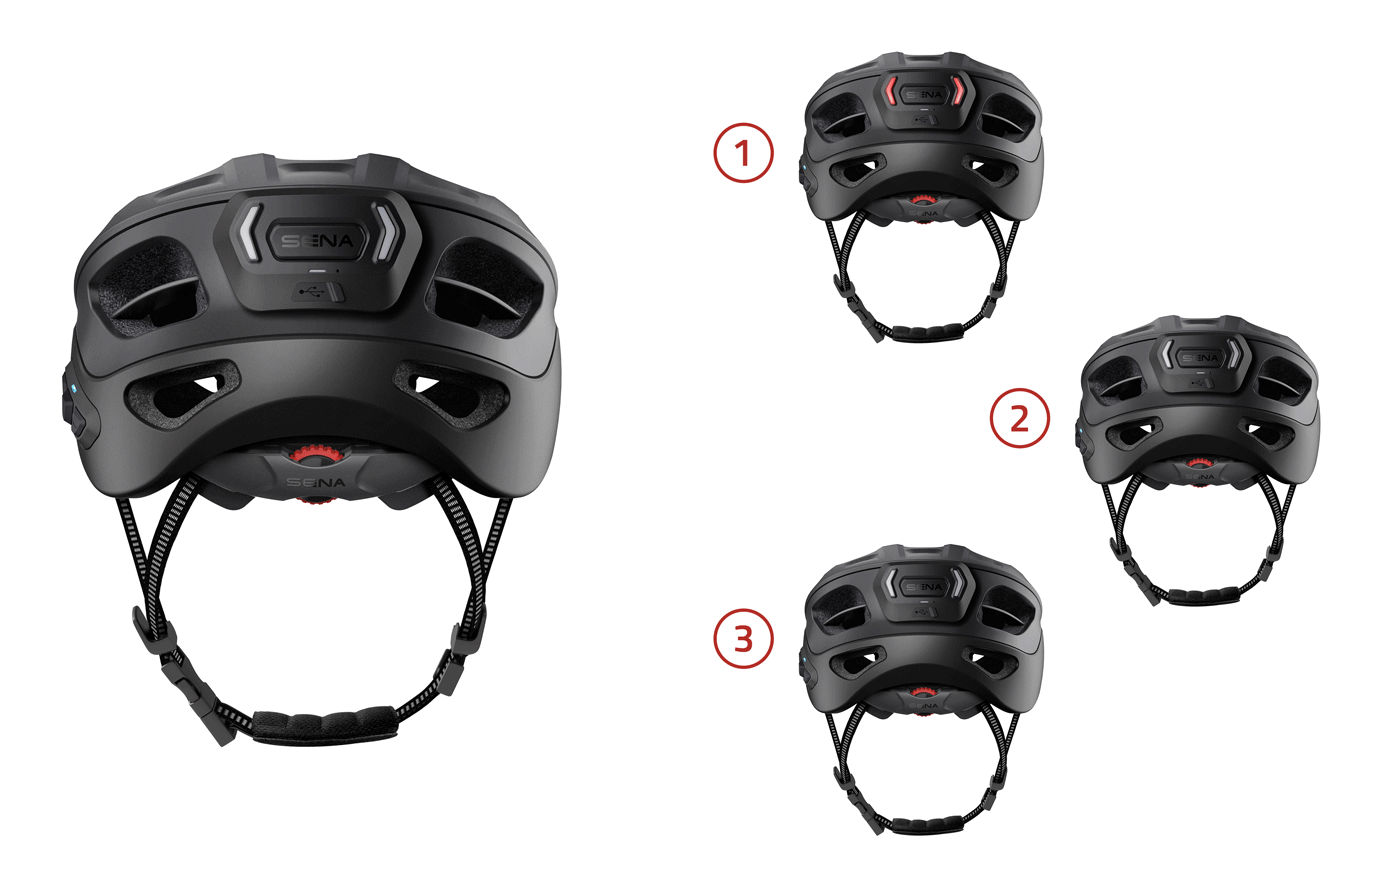 Sena R1 EVO Smart Cycling helm